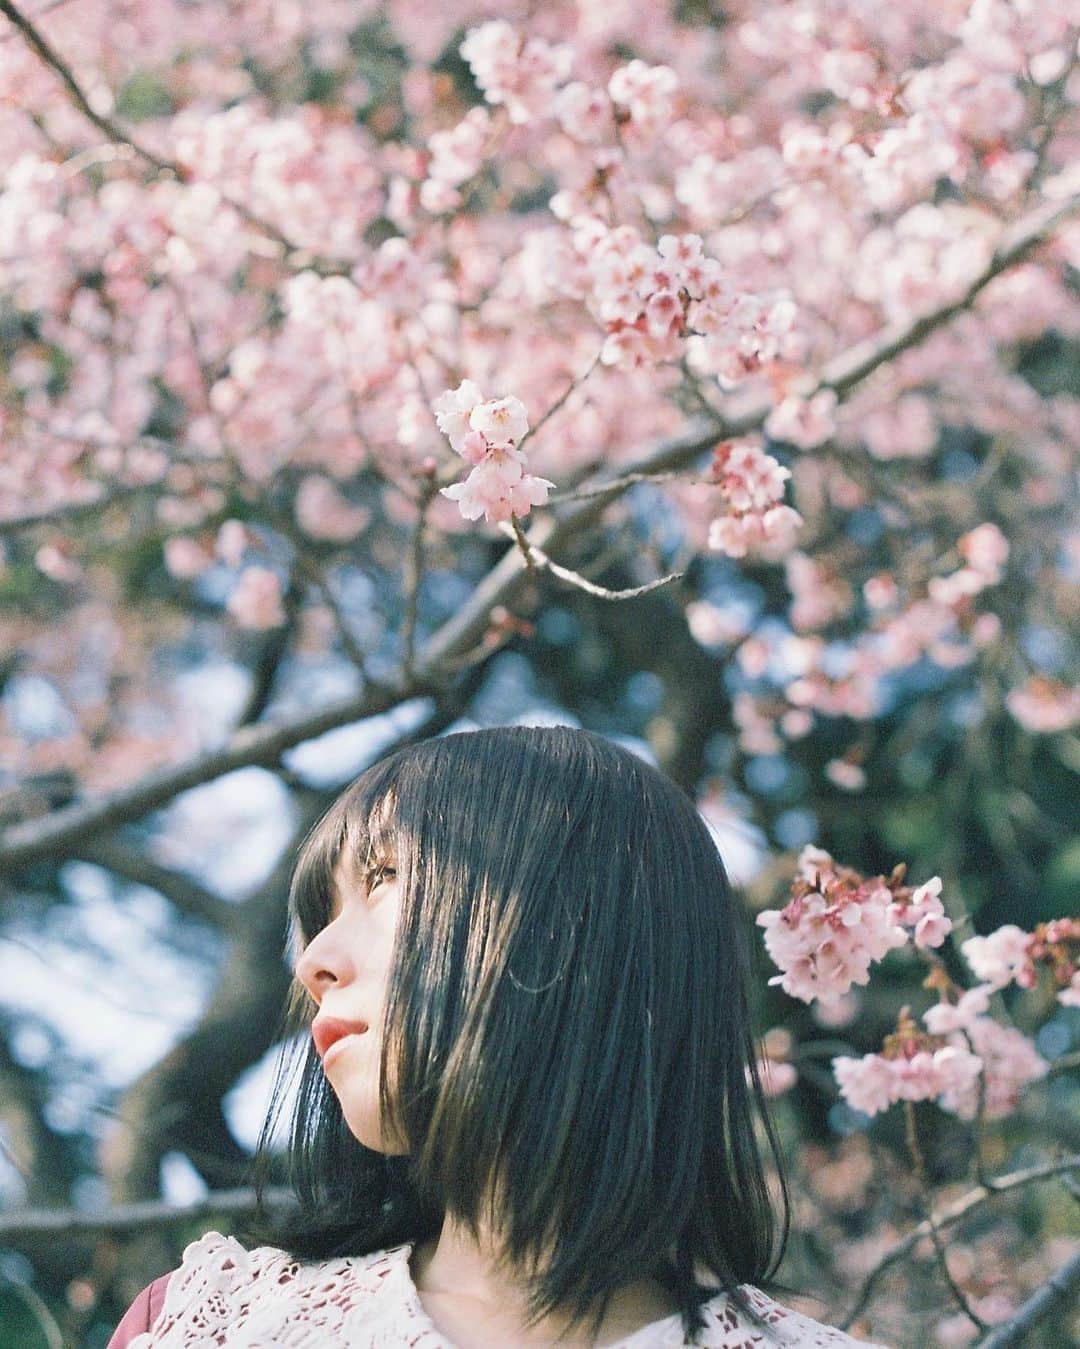 haru wagnusのインスタグラム：「Sakura saku ❀ ㅤㅤㅤㅤㅤㅤㅤㅤㅤㅤㅤㅤㅤ ㅤㅤㅤㅤㅤㅤㅤㅤㅤㅤㅤㅤㅤ ㅤㅤㅤㅤㅤㅤㅤㅤㅤㅤㅤㅤㅤ 今年は桜をたくさん撮りたいし、お花見をして、春を満喫したい🌸 ㅤㅤㅤㅤㅤㅤㅤㅤㅤㅤㅤㅤㅤ ㅤㅤㅤㅤㅤㅤㅤㅤㅤㅤㅤㅤㅤ #contaxs2  #optonsonnar50mm15  ㅤㅤㅤㅤㅤㅤㅤㅤㅤㅤㅤㅤㅤ #sakura #桜 #桜ポートレート #cherryblossom #cherryblossoms ##bodylanguage_bnc #globe_people #portraitfestival #ig_mood #igs_photos #fashionportrait #ladiesfashion #portraitsru #thediscoverer #しんやとよーへい　#japanofinsta #ibirba #opsposh #opsobjects  #bounjourno #soriaestademoda #sorridereallavita #fblogger #japan_daytime_view #japan_of_insta #japantravel #japaneseculture」